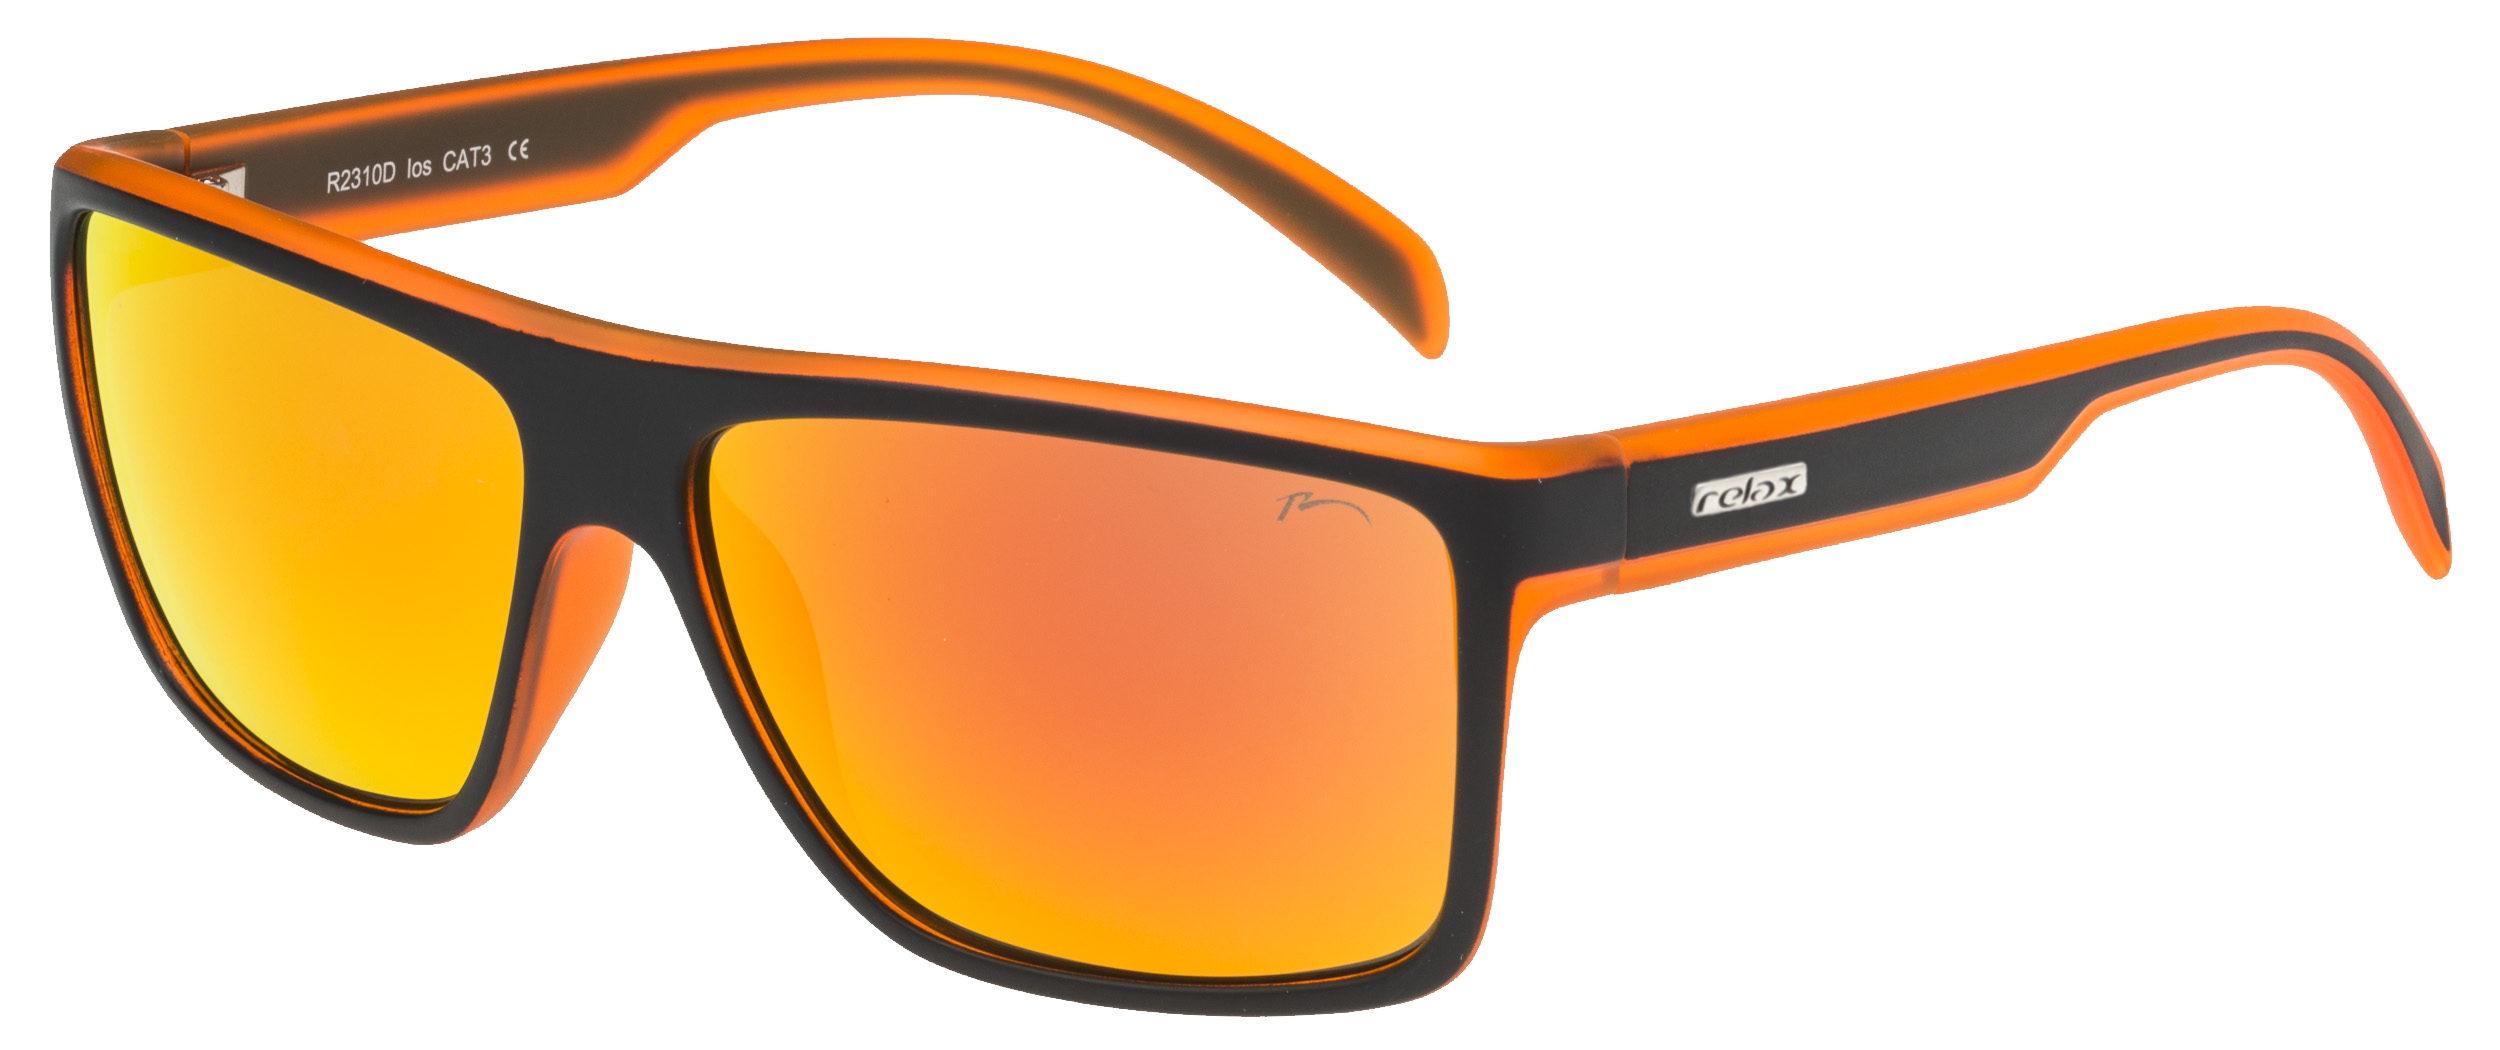 Sluneční brýle Relax  Ios  R2310D - standard